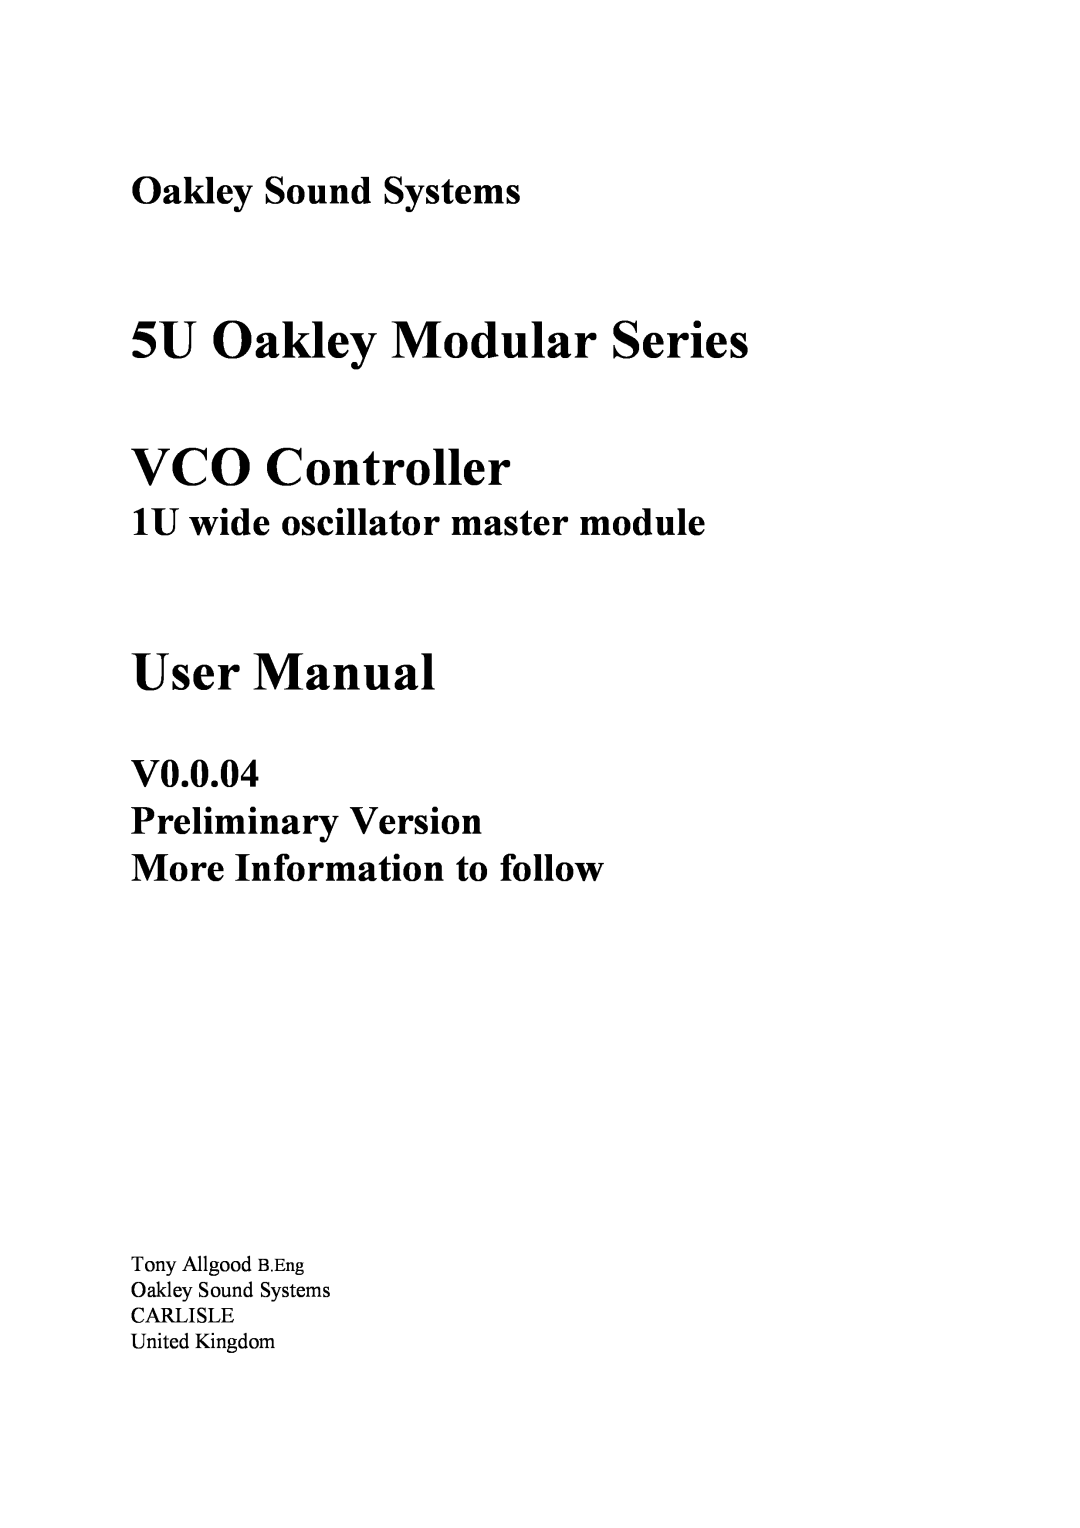 Oakley user manual 5U Oakley Modular Series VCO Controller, Oakley Sound Systems, 1U wide oscillator master module 